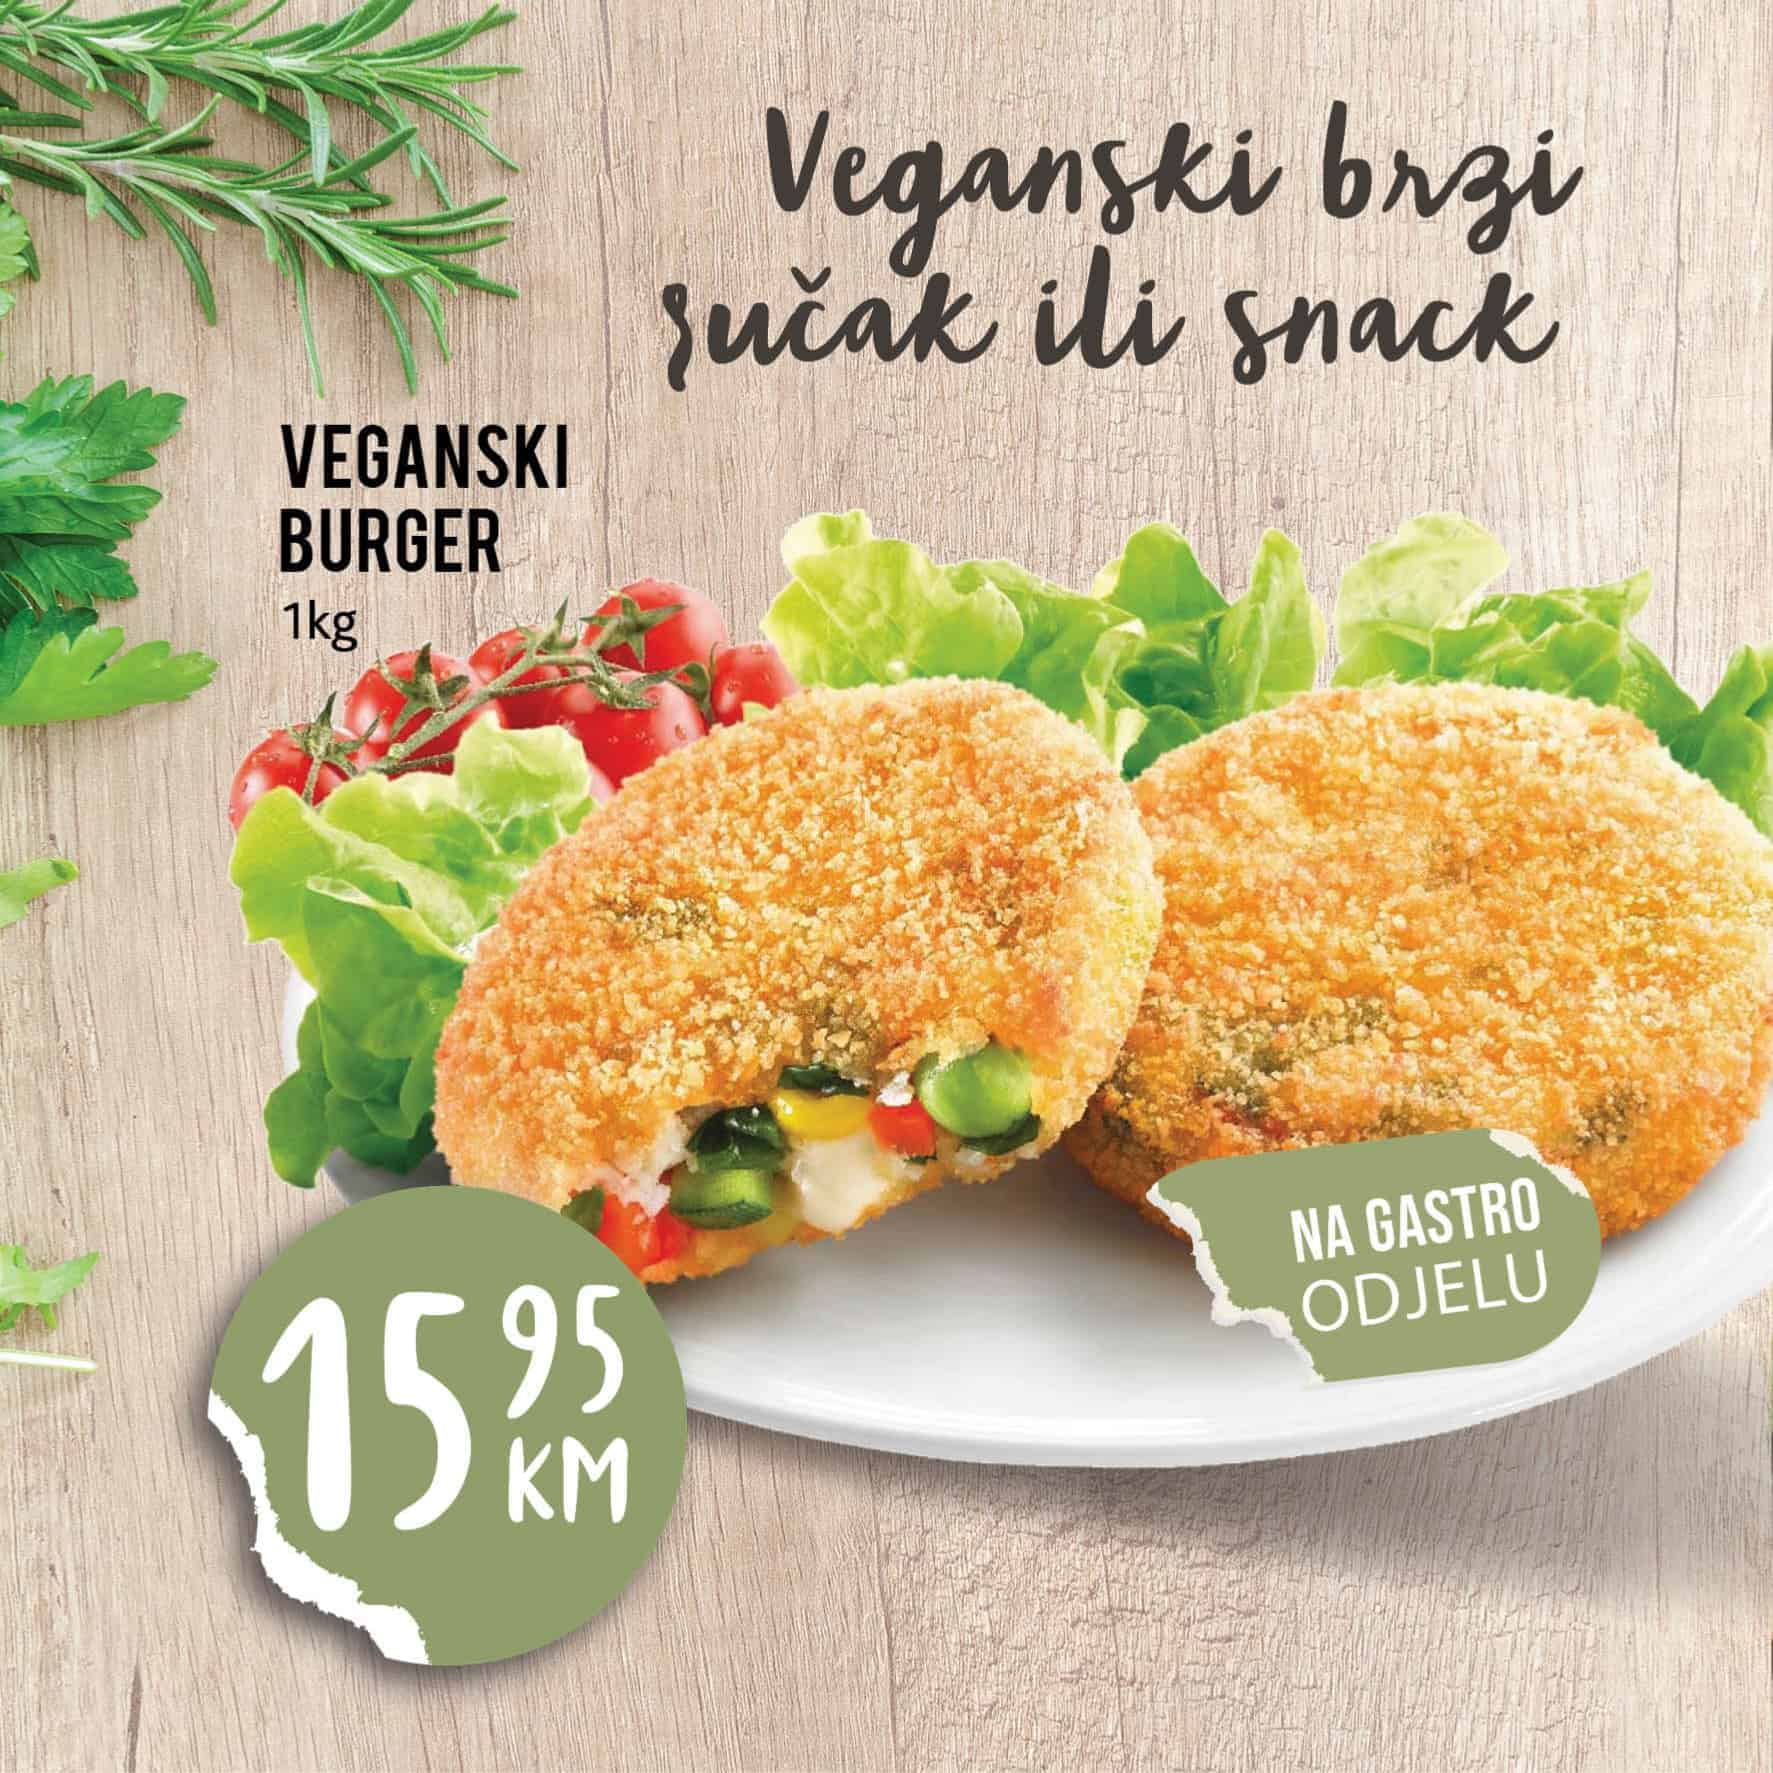 veganski burger, veganski burger gdje kupiti, veganski burger konzum, veganski burger akcija,m veganski burger cijena